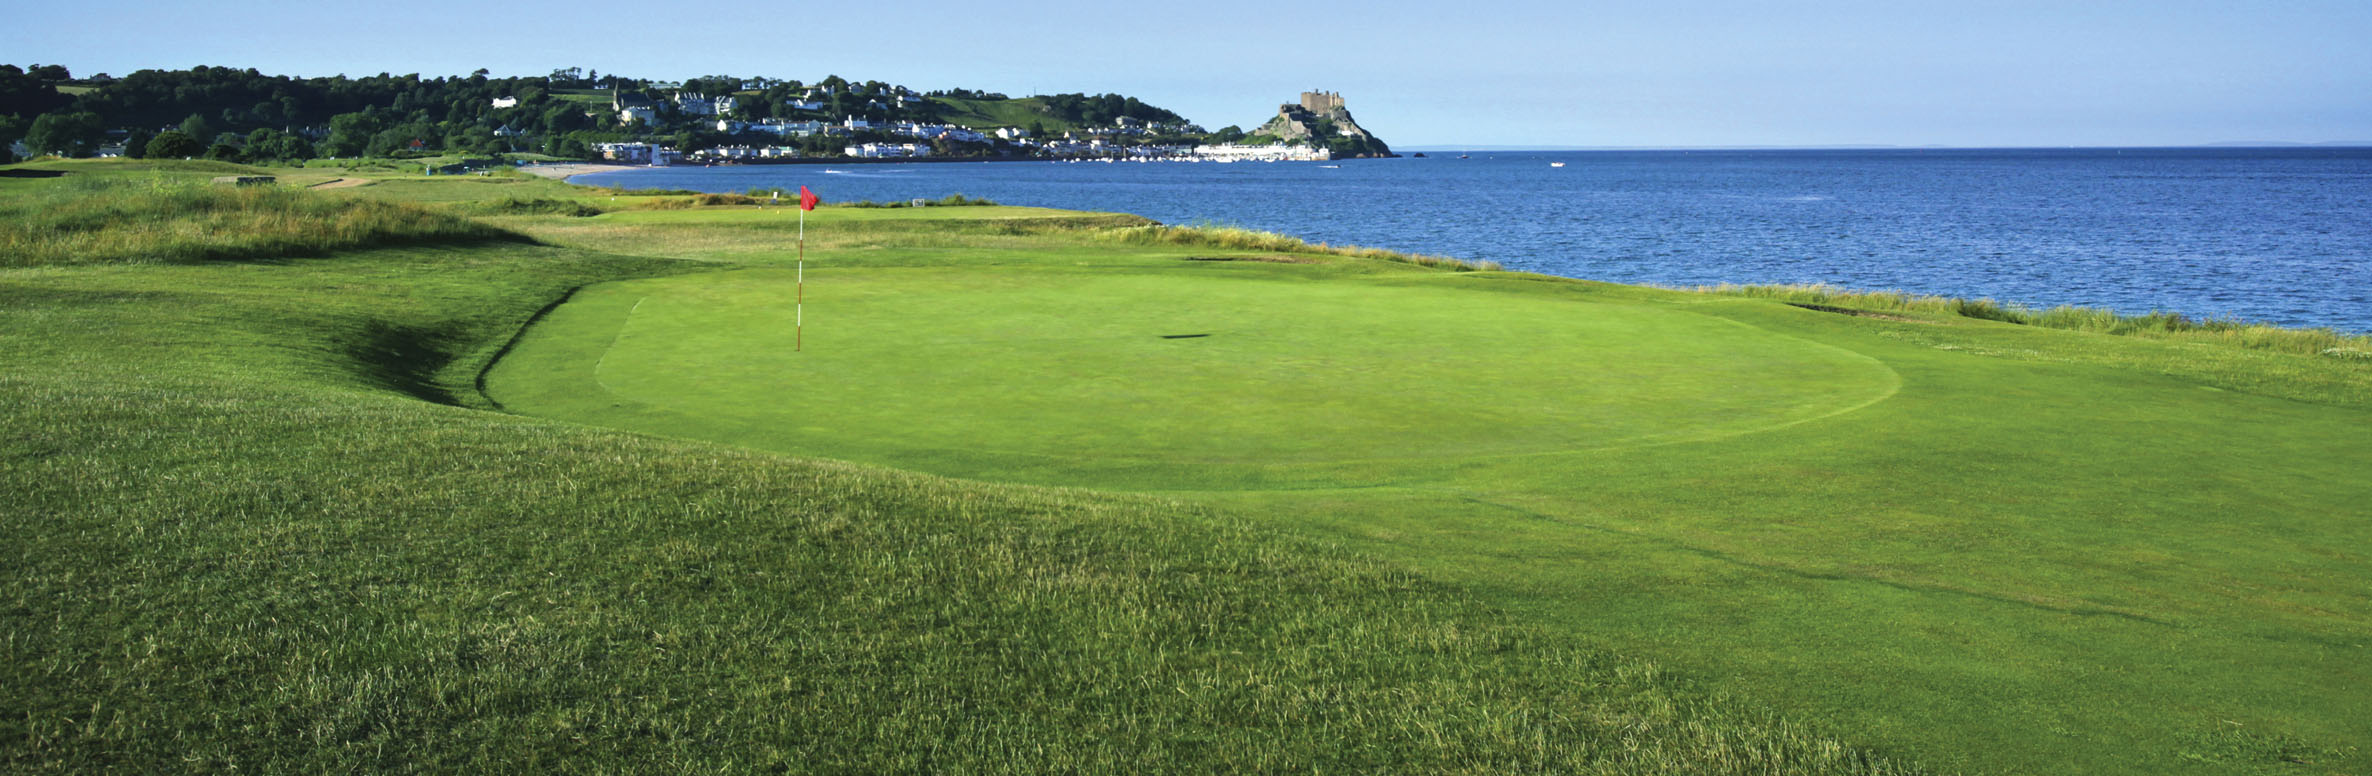 Golf Course Image - Royal Jersey Golf Club No. 1